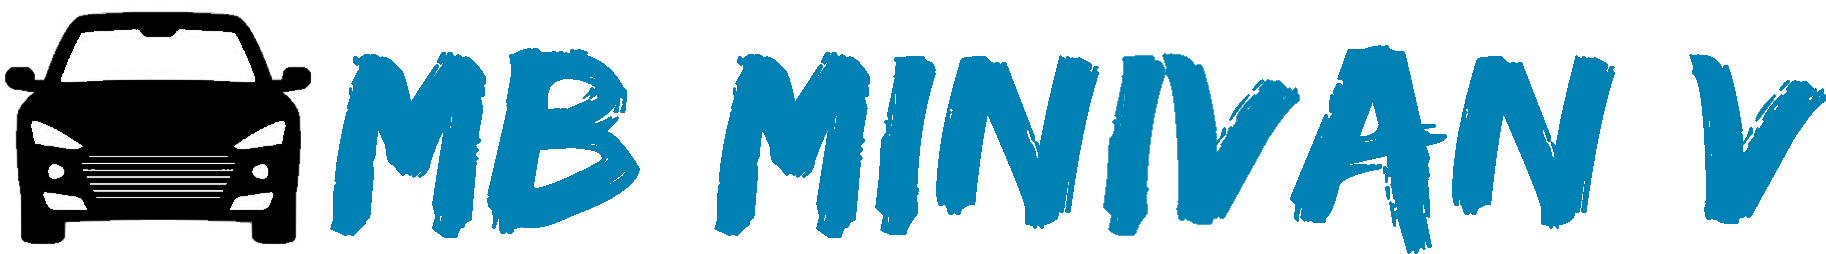 Mb Minivan V